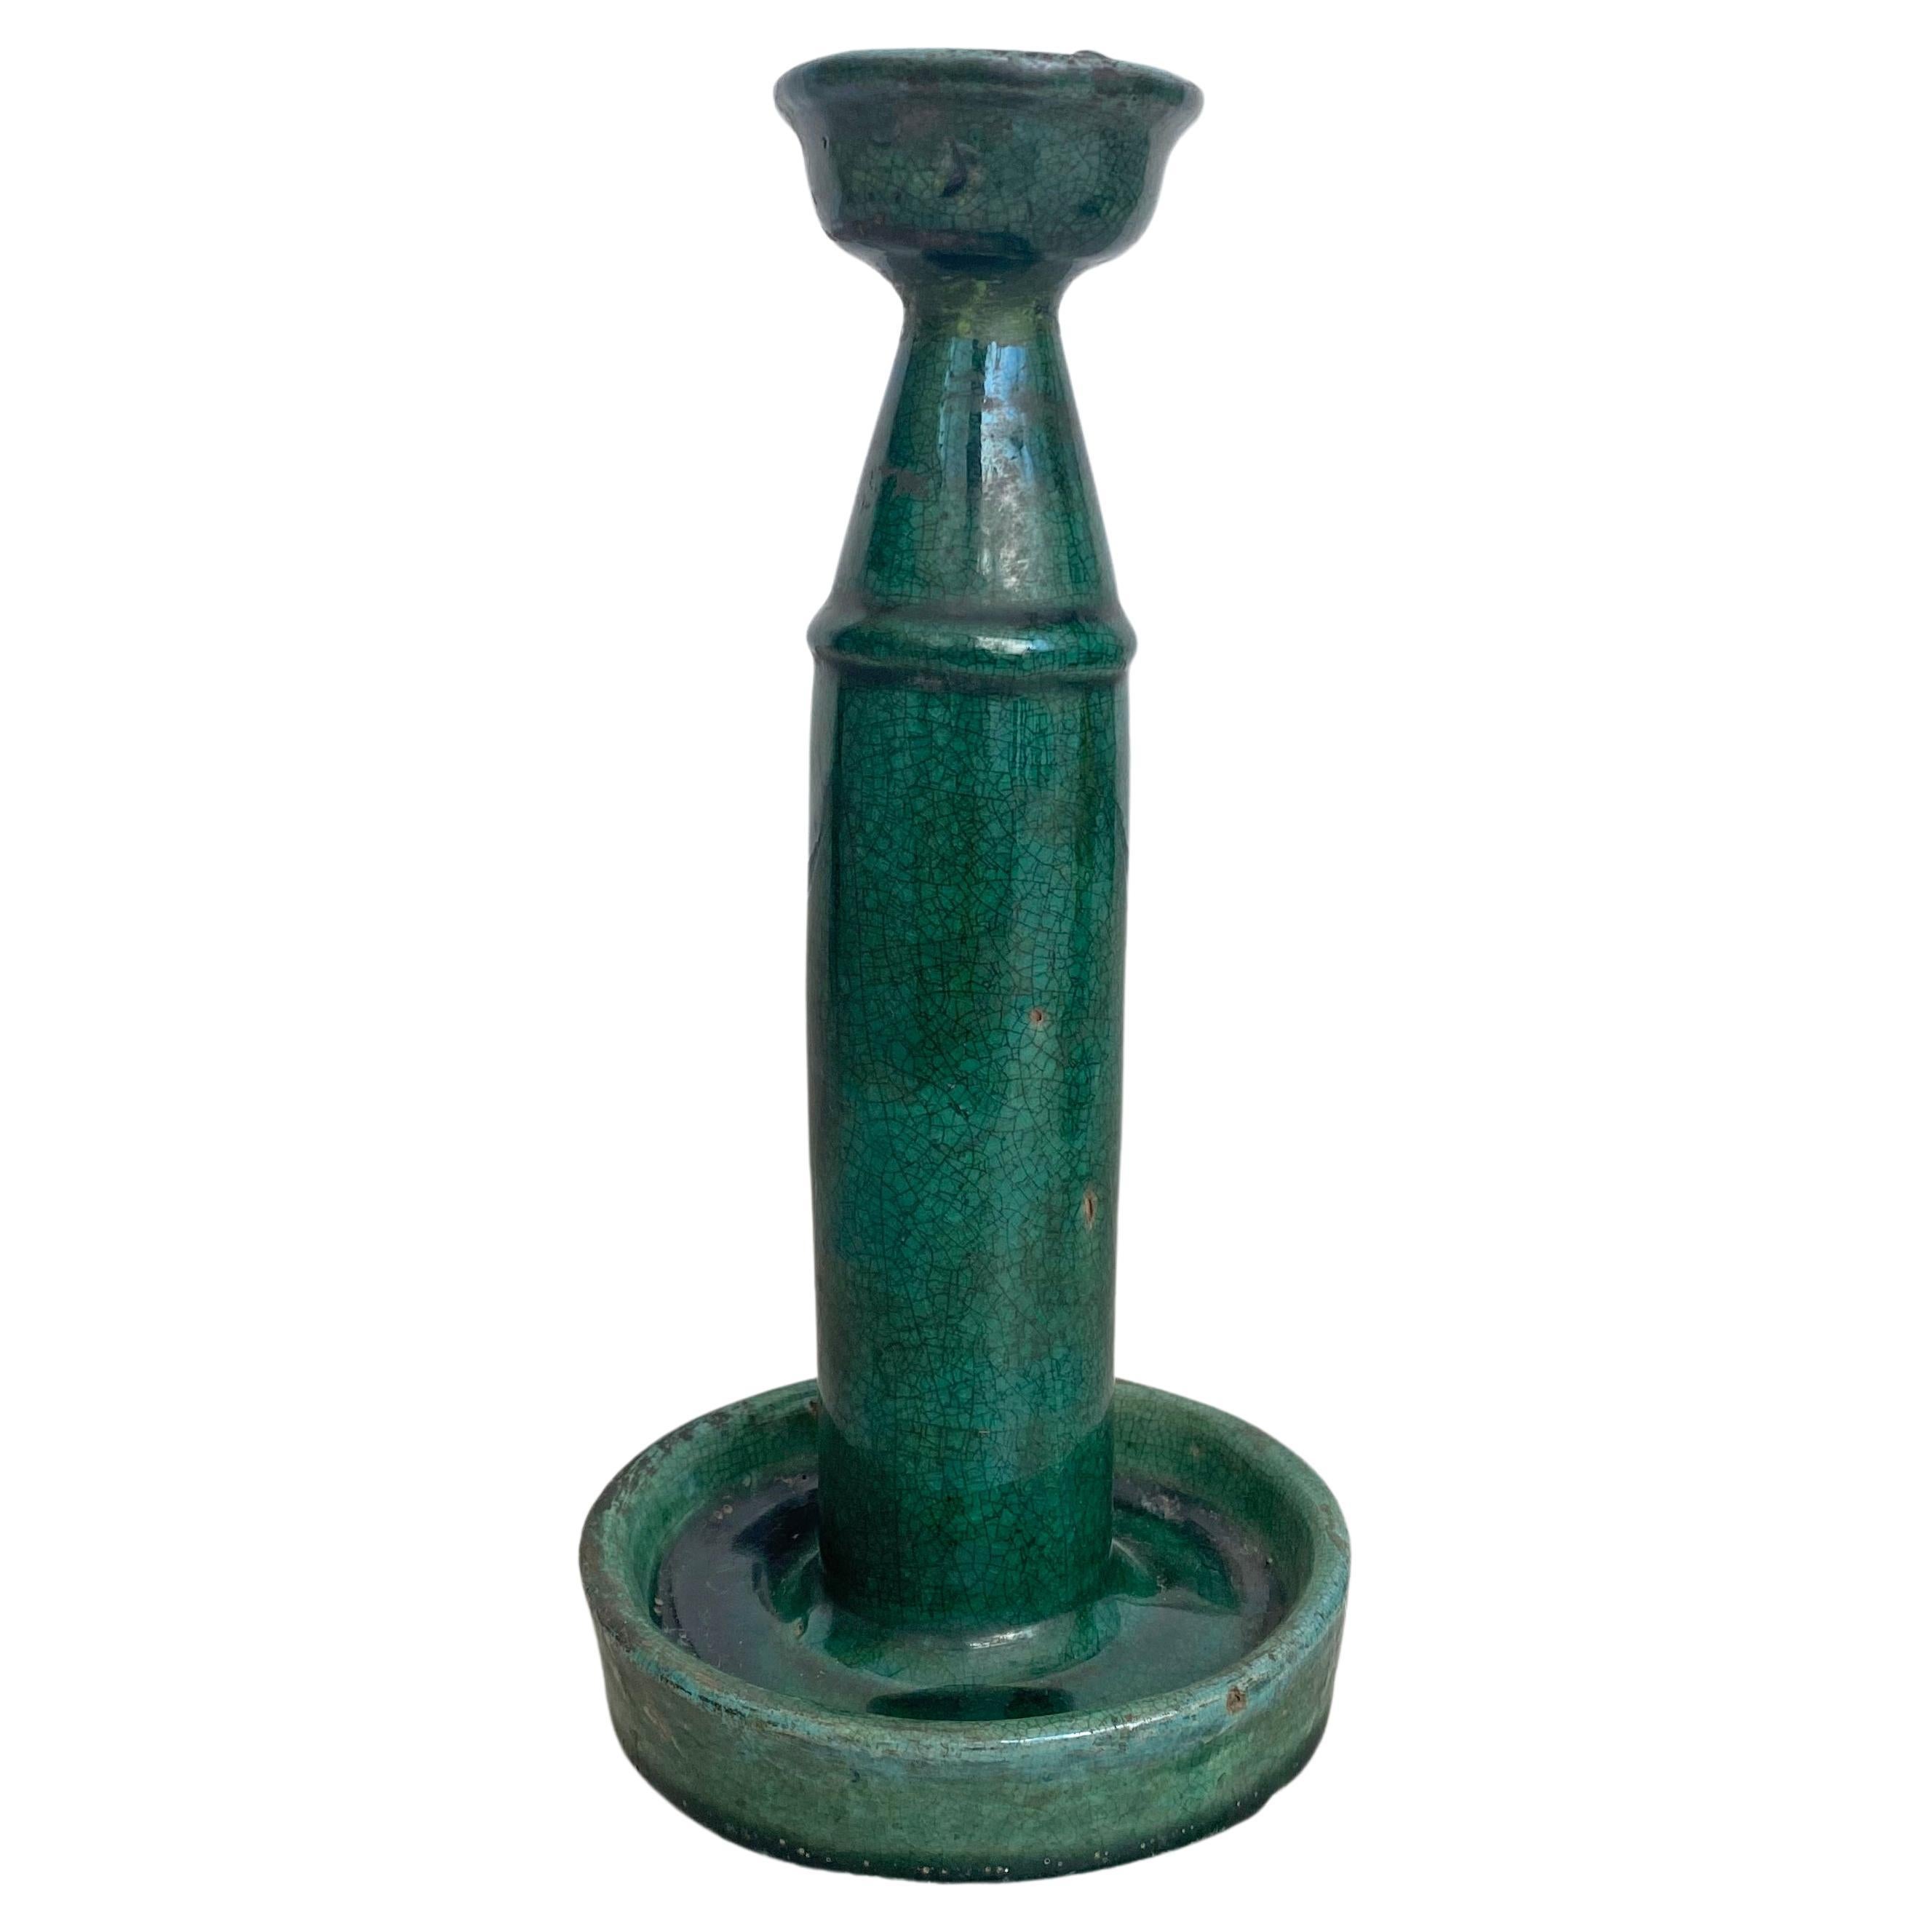 Chinese Ceramic 'Shiwan' Oil Lamp / Candleholder, Green Glaze, c. 1900